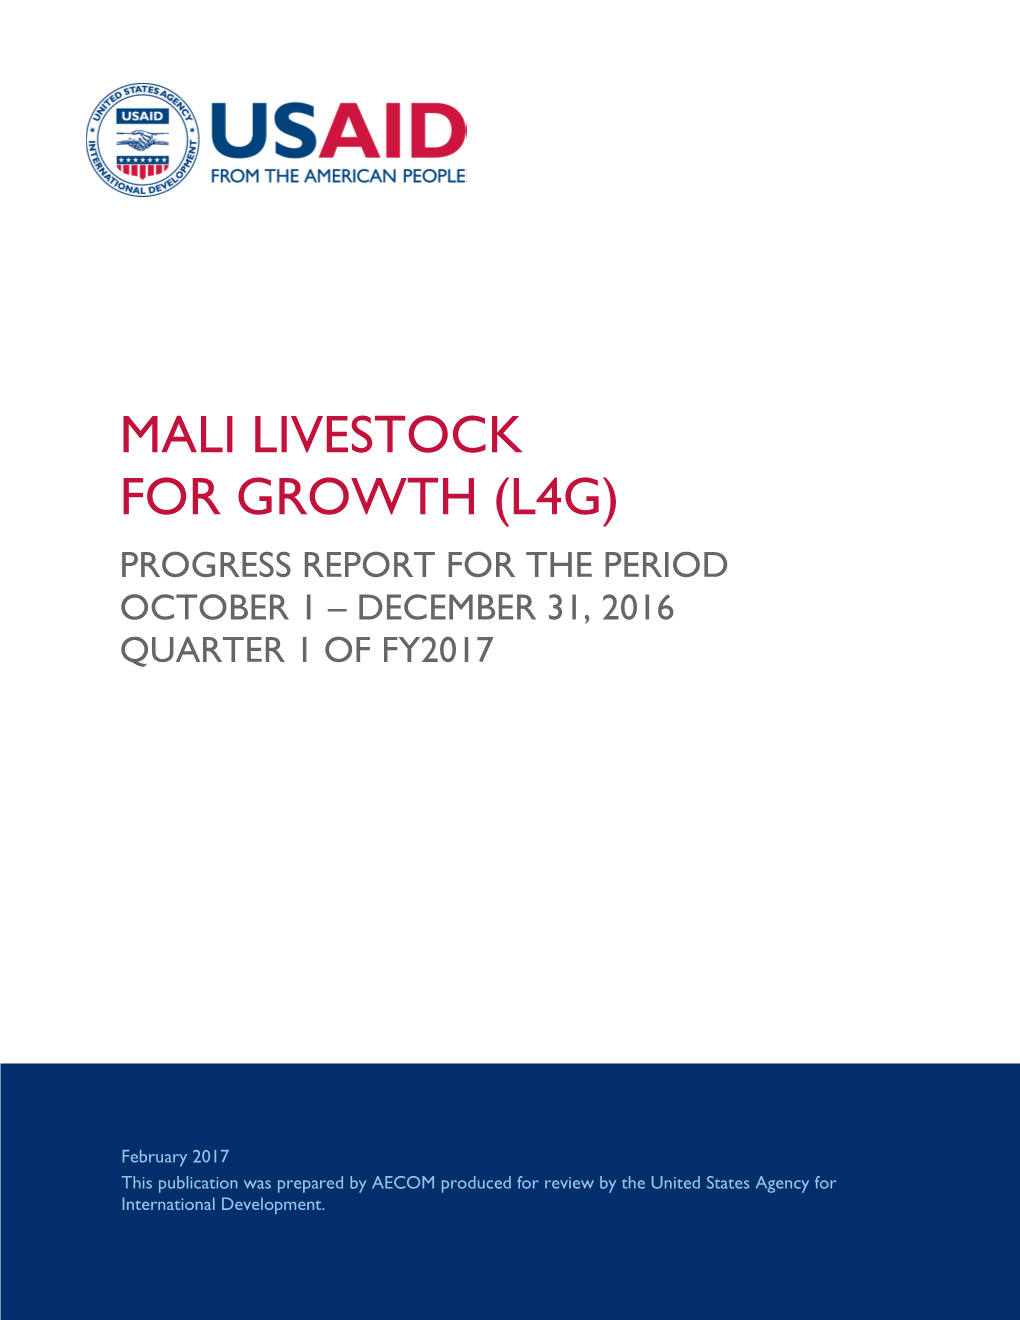 Mali Livestock for Growth (L4G) 1